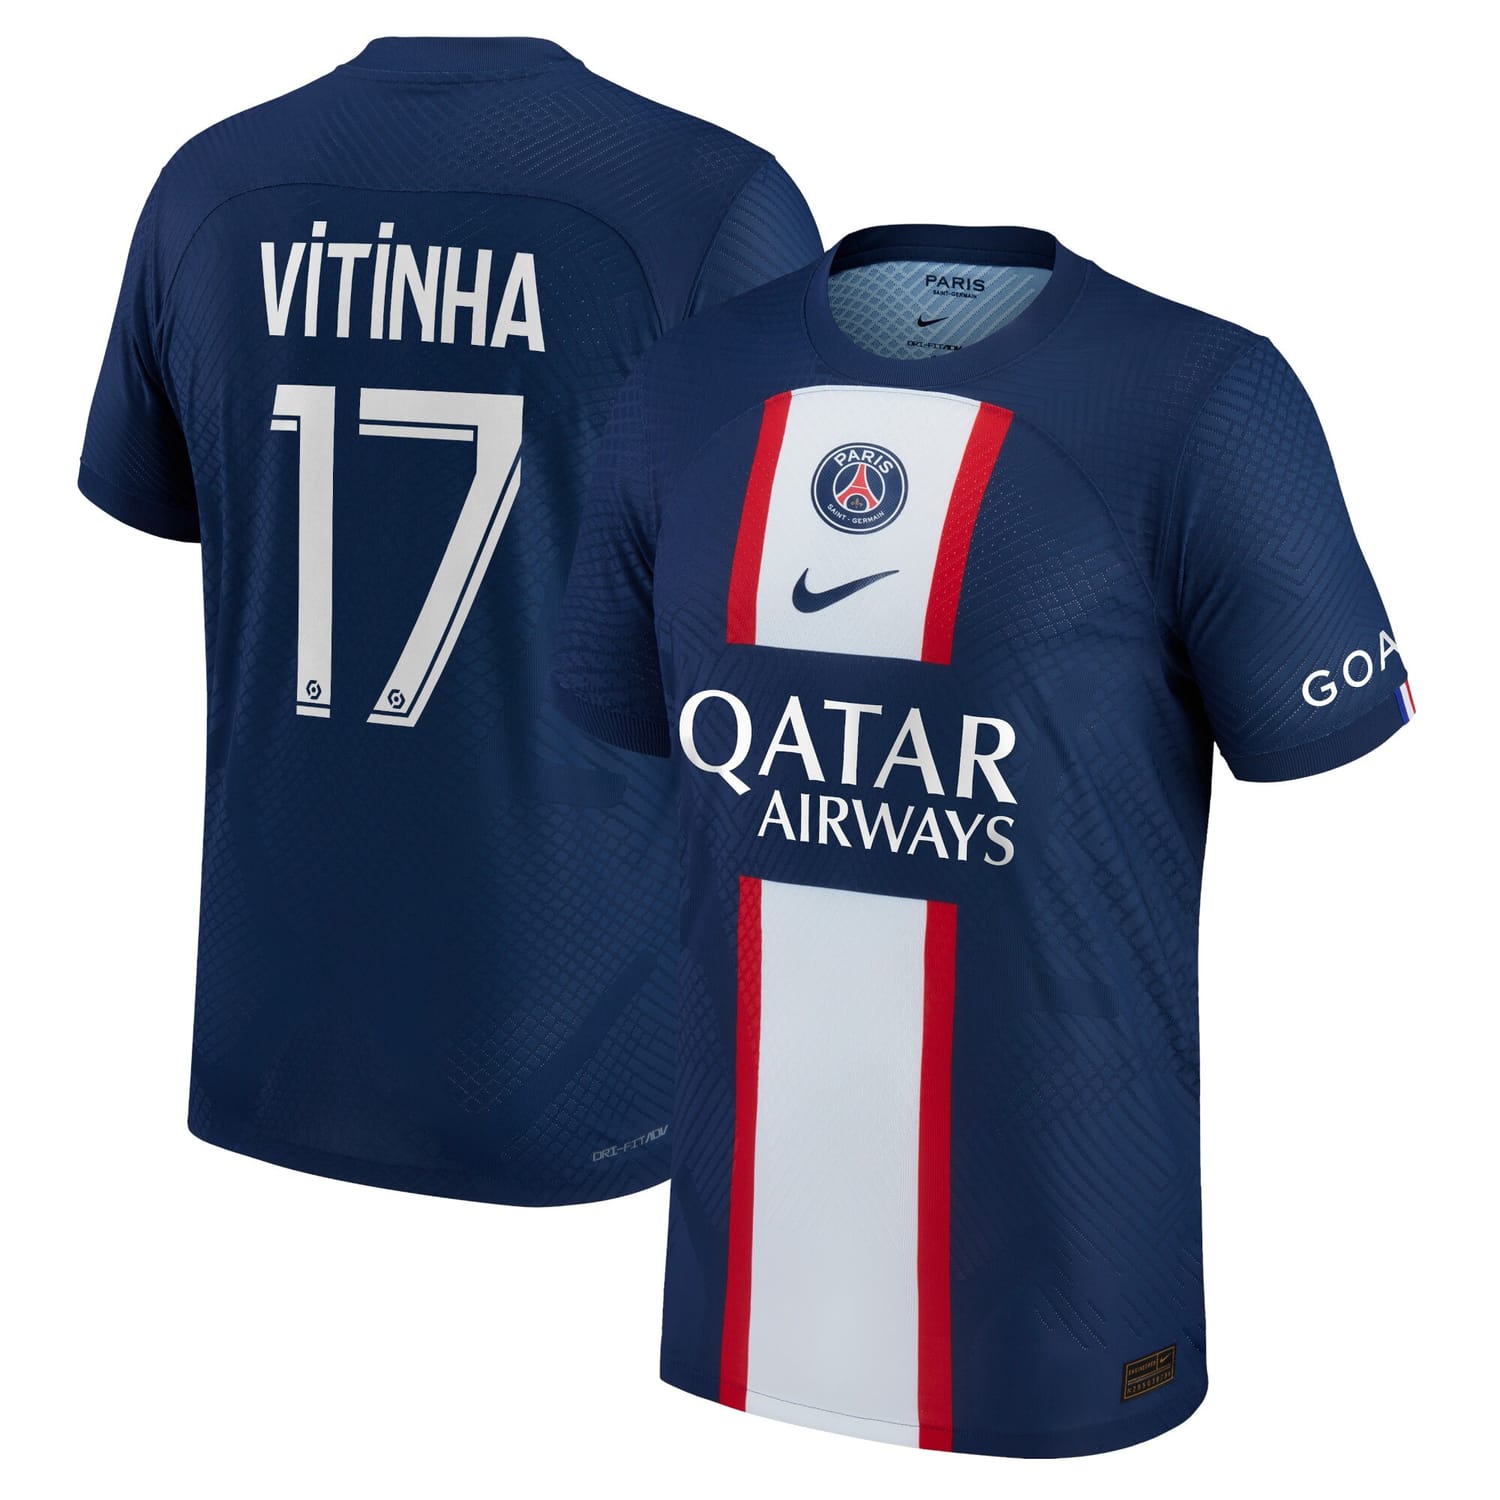 Ligue 1 Paris Saint-Germain Home Authentic Jersey Shirt 2022-23 player Vitinha 17 printing for Men